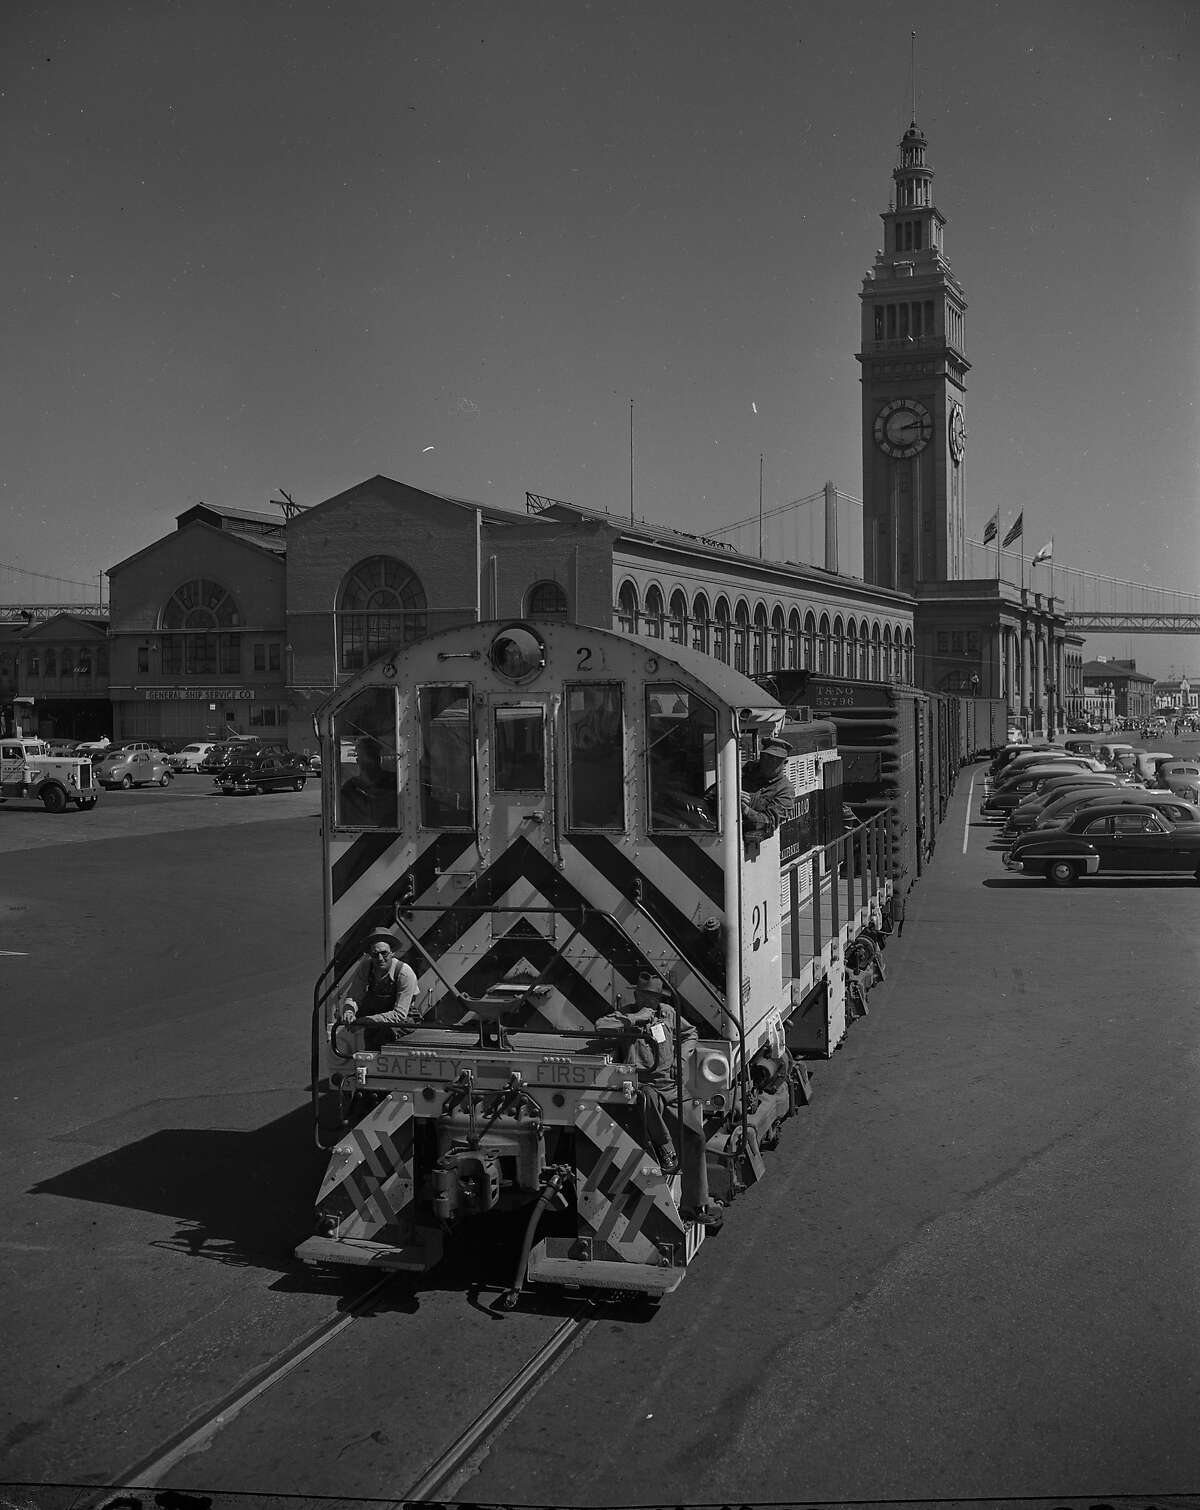 The State Belt Line Railroad Photos shot April 1950